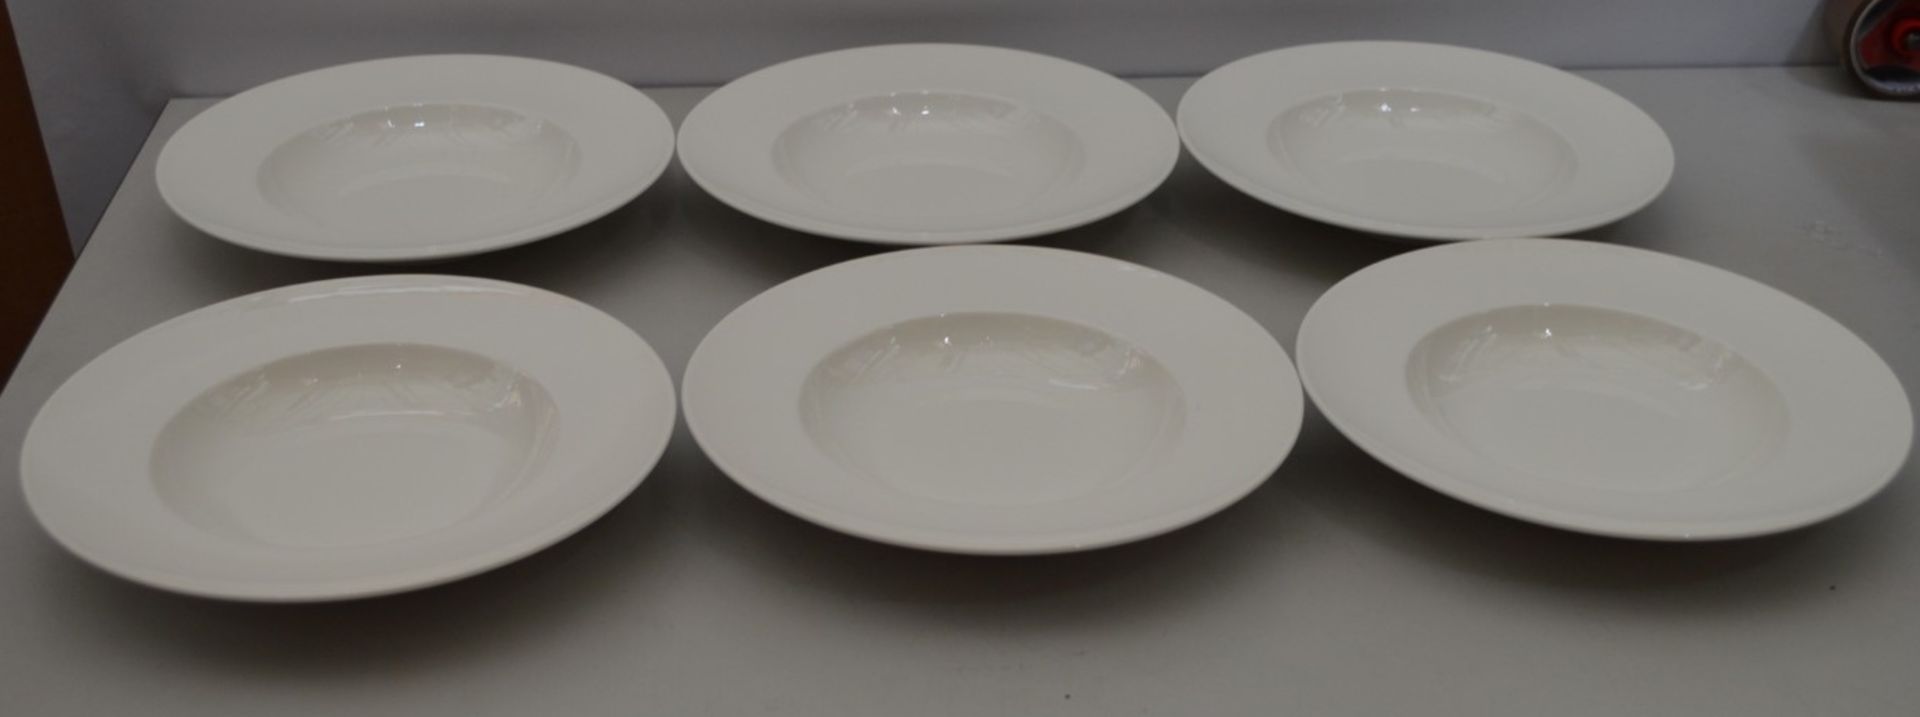 4 x Villeroy & Boch Universal Pasta Plate (0.6L) White 6 x Plates Unused Box 16-2040-2790 W300mm (RR - Image 2 of 4